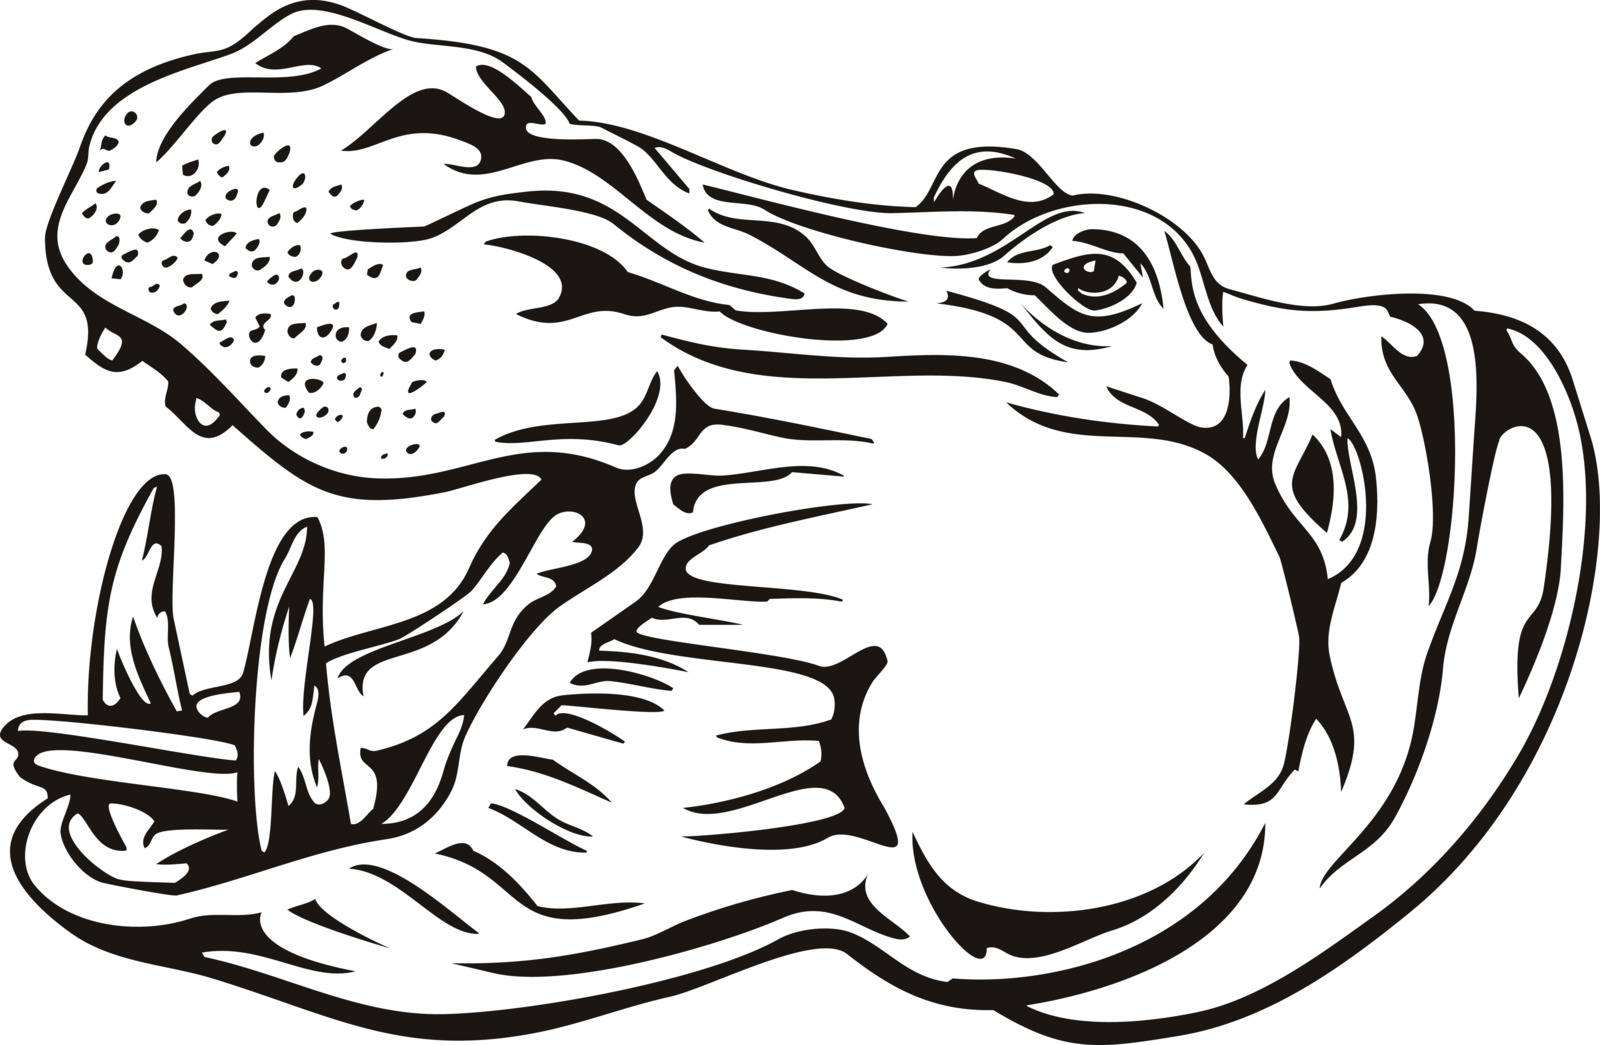 Retro woodcut style illustration of head of a hippopotamus, hippo, common hippopotamus or river hippopotamus, a large herbivorous, semiaquatic mammal ungulate isolated background in black and white.